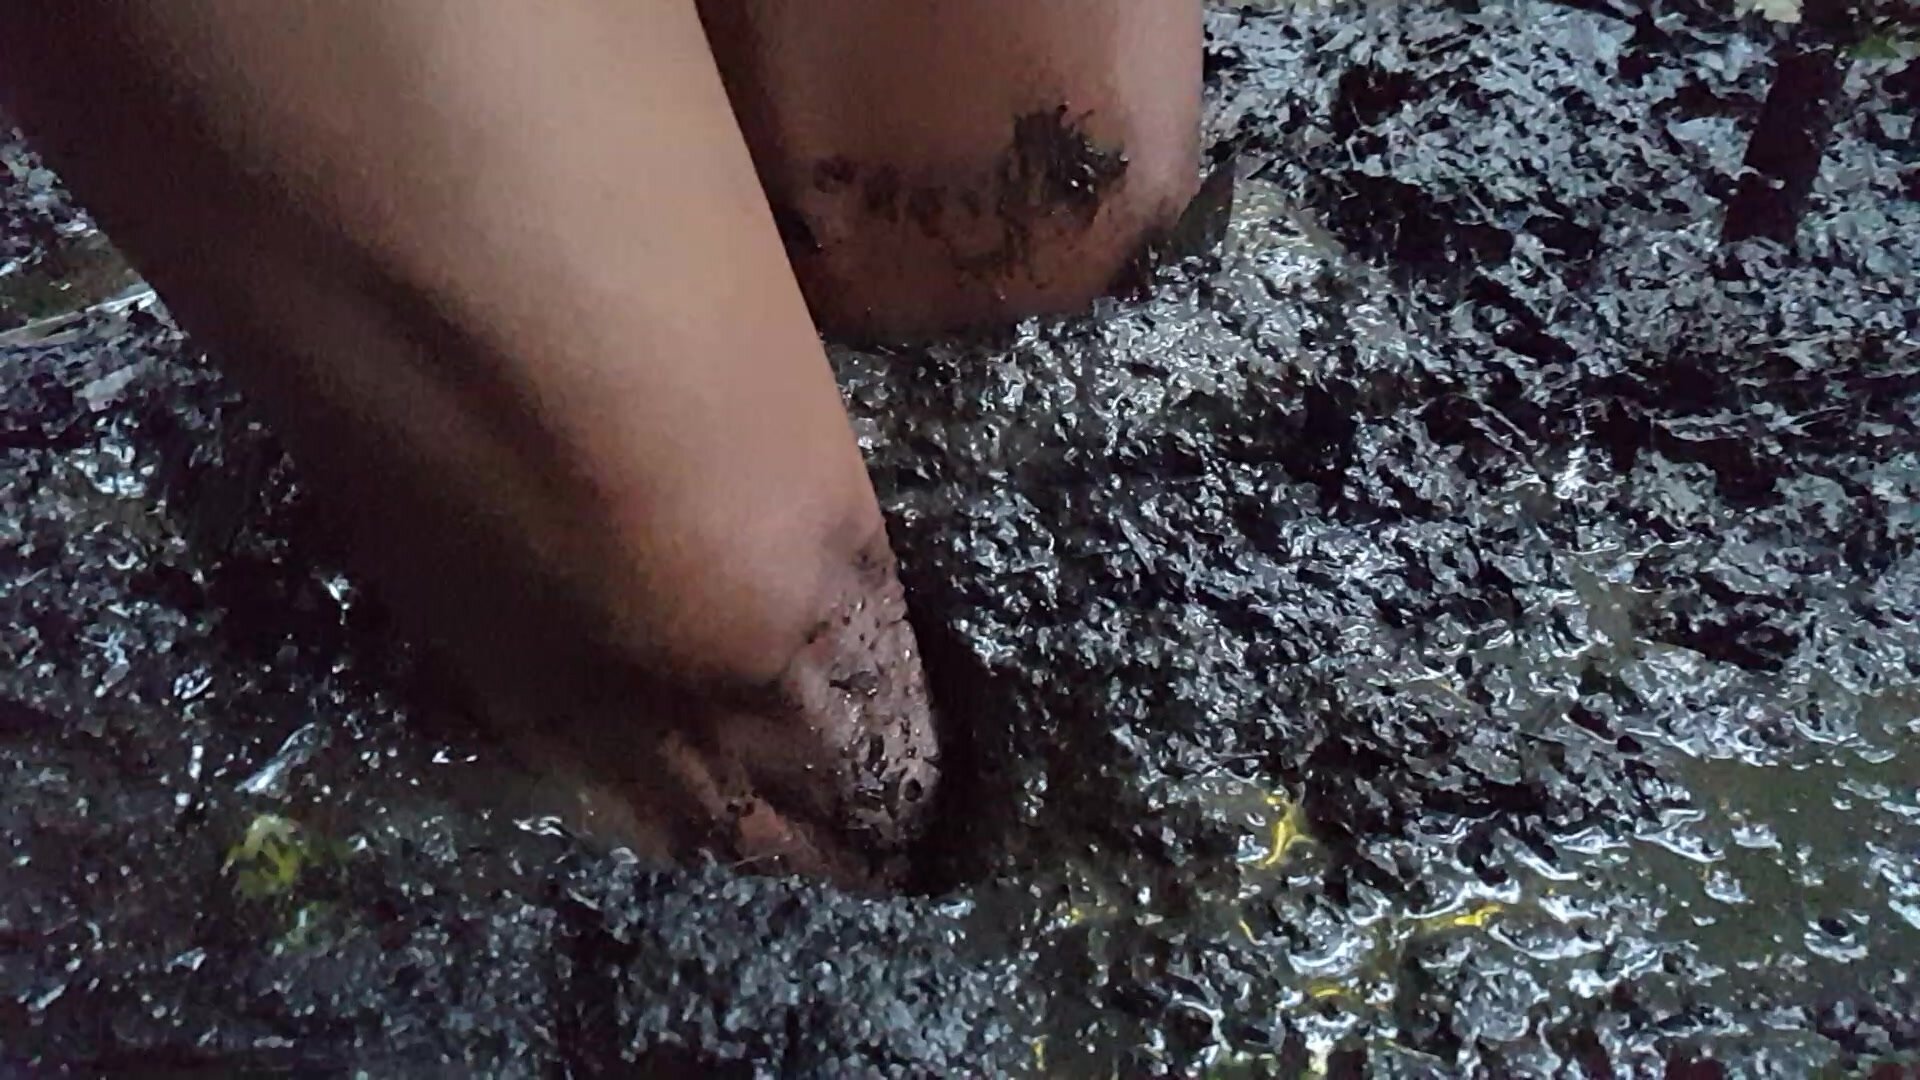 Black Mud Porn - Barefoot deep mud walk - ThisVid.com